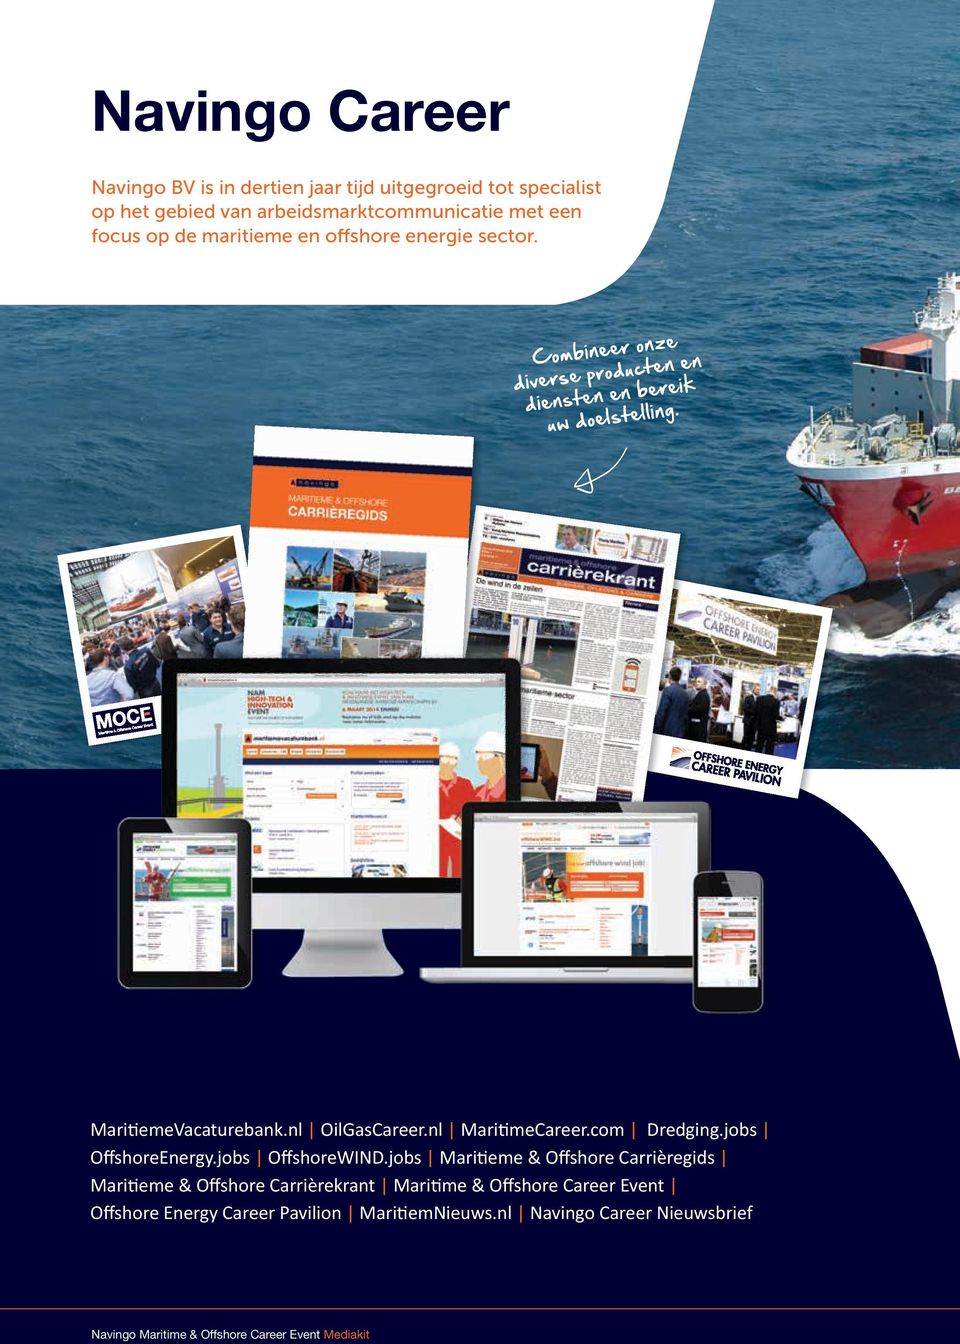 MaritiemeVacaturebank.nl OilGasCareer.nl MaritimeCareer.com Dredging.jobs OffshoreEnergy.jobs OffshoreWIND.